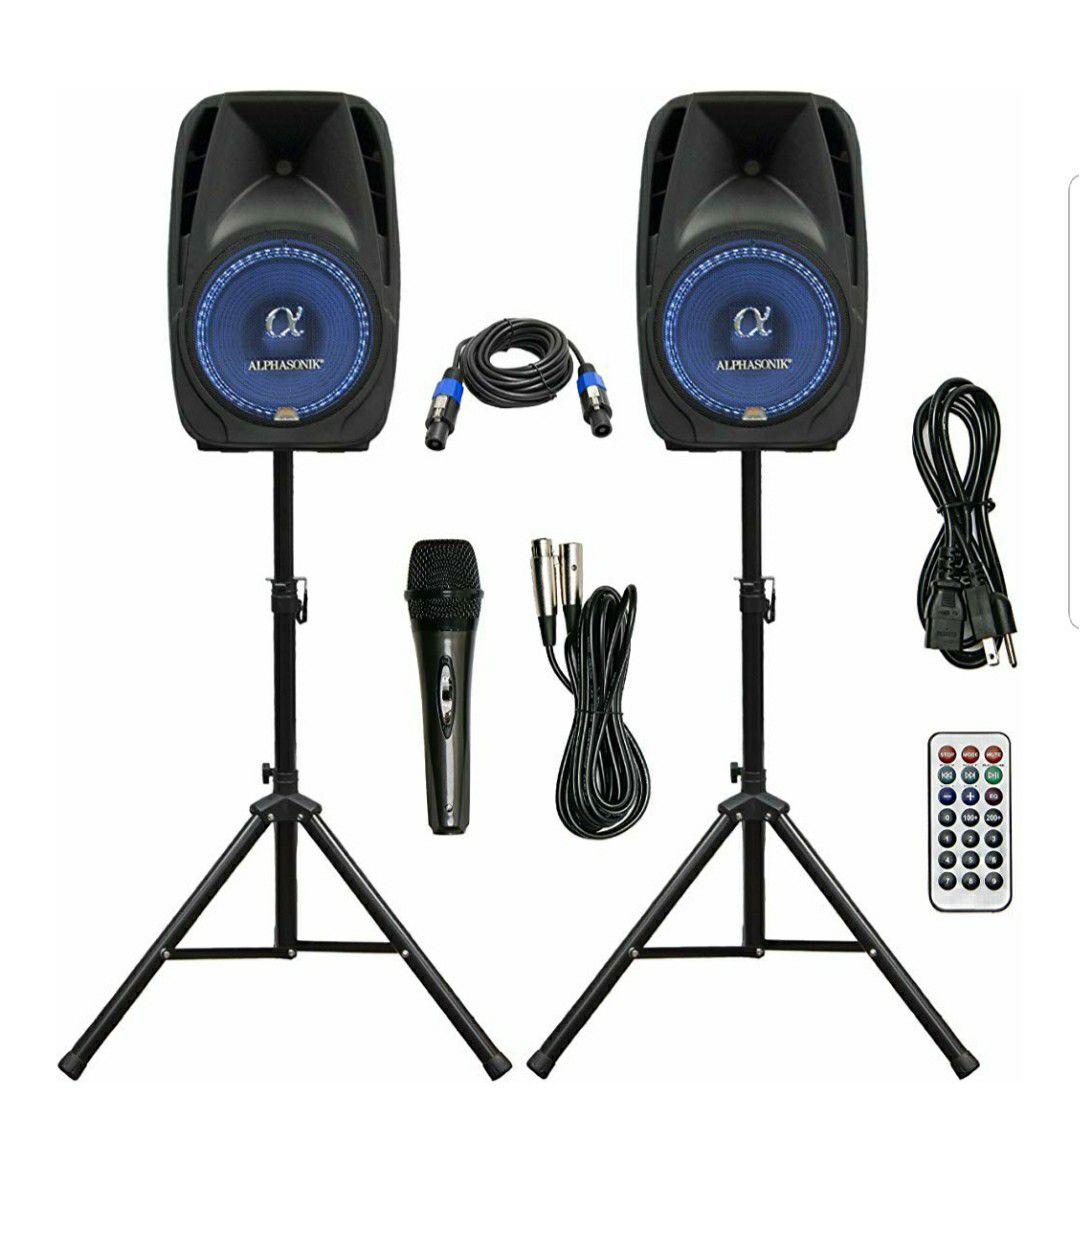 Bluetooth speaker Alphasonik 12" 1500w